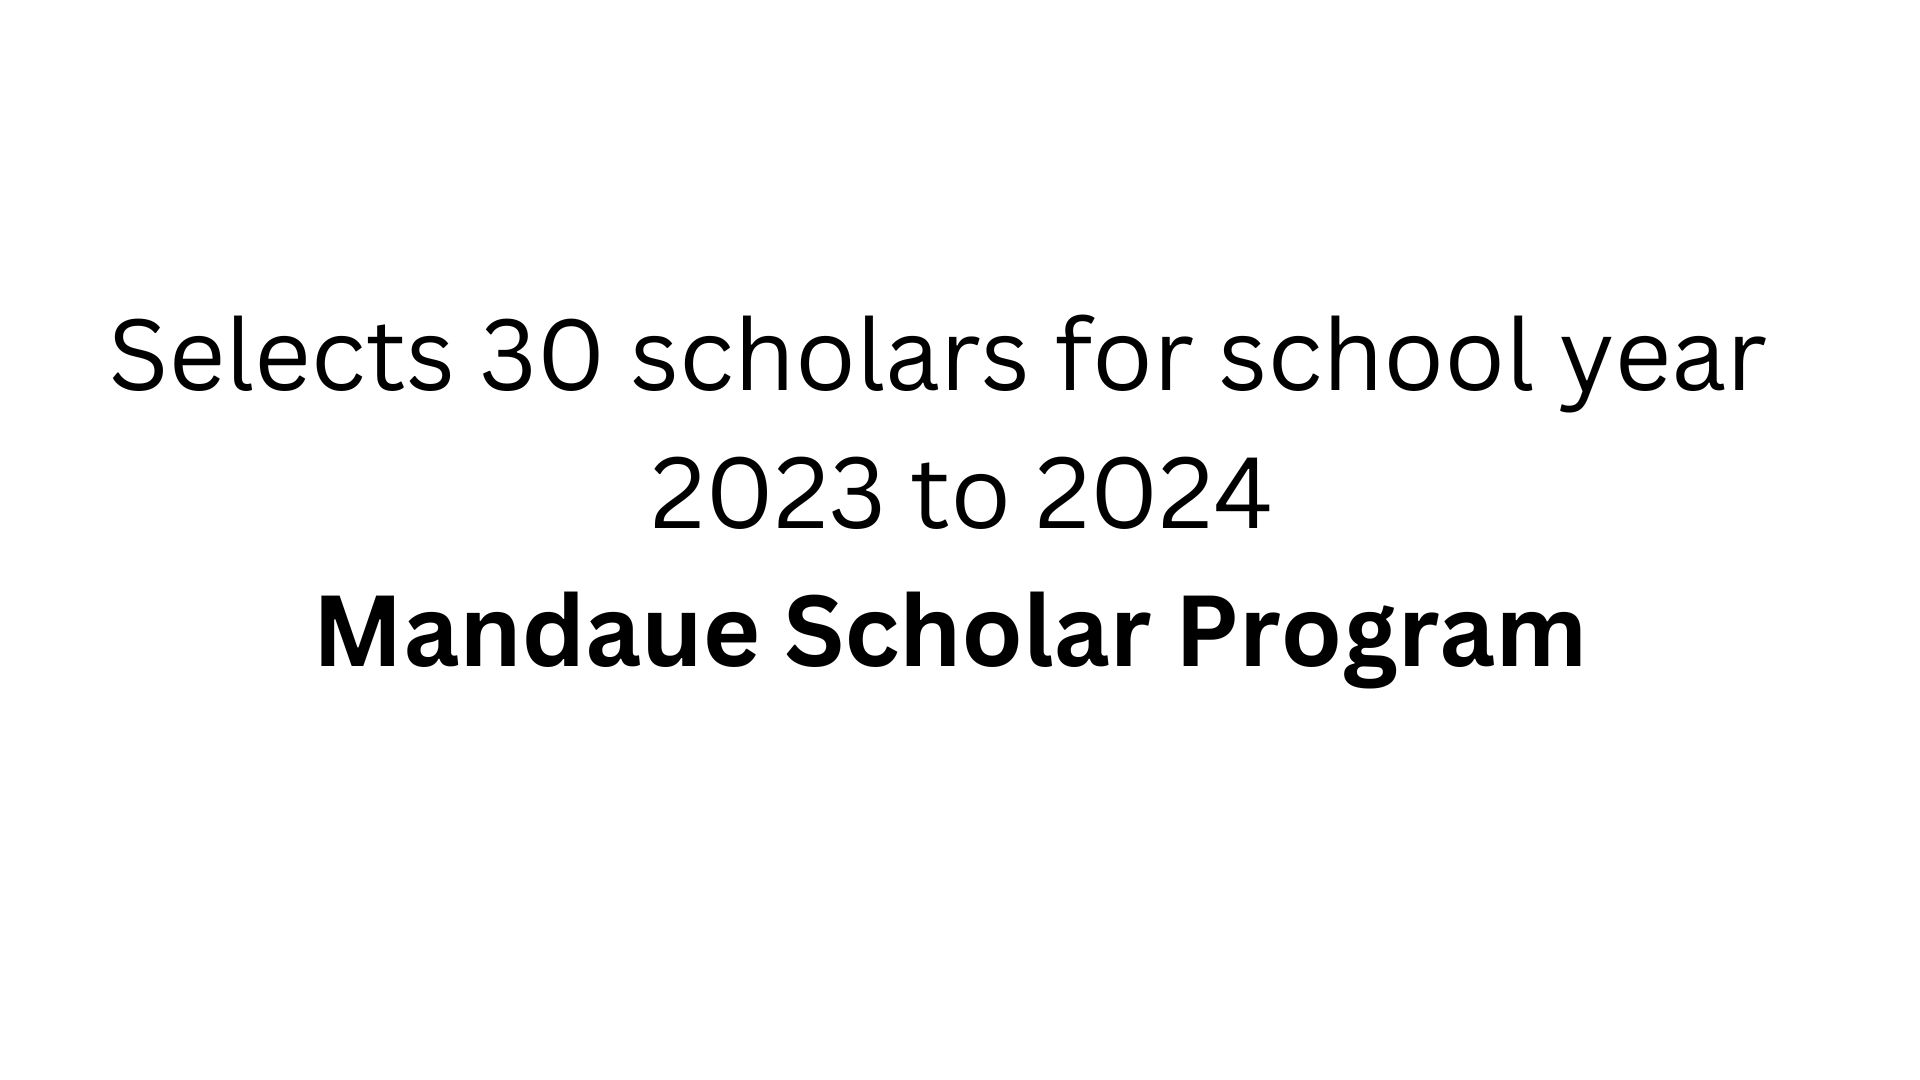 Mandaue Scholarship Program for the School Year 2023 to 2024